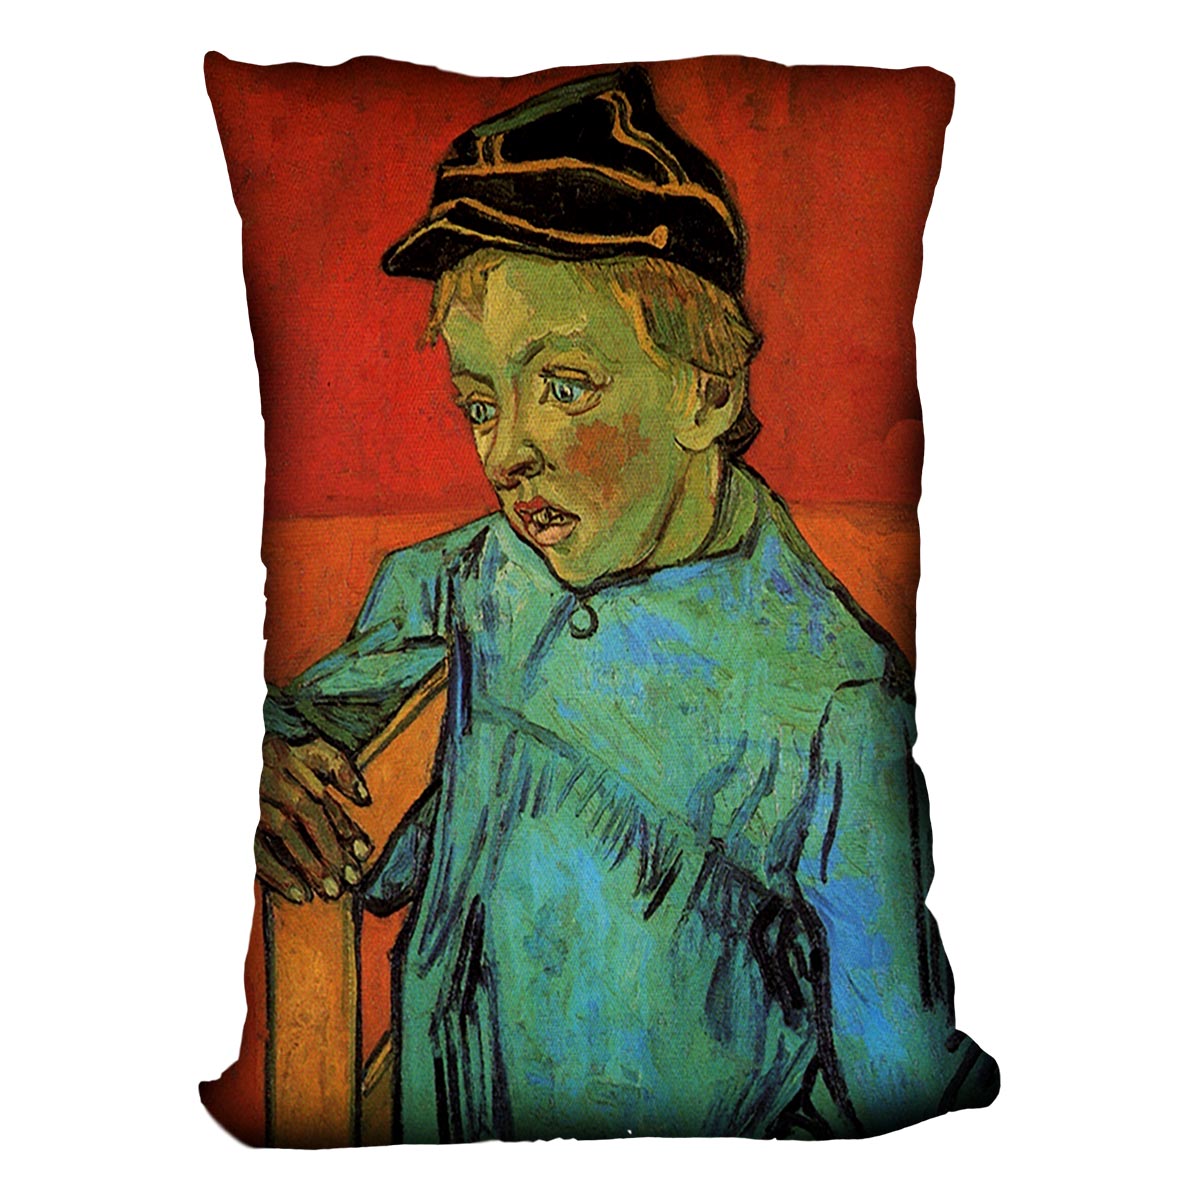 The Schoolboy Camille Roulin by Van Gogh Cushion